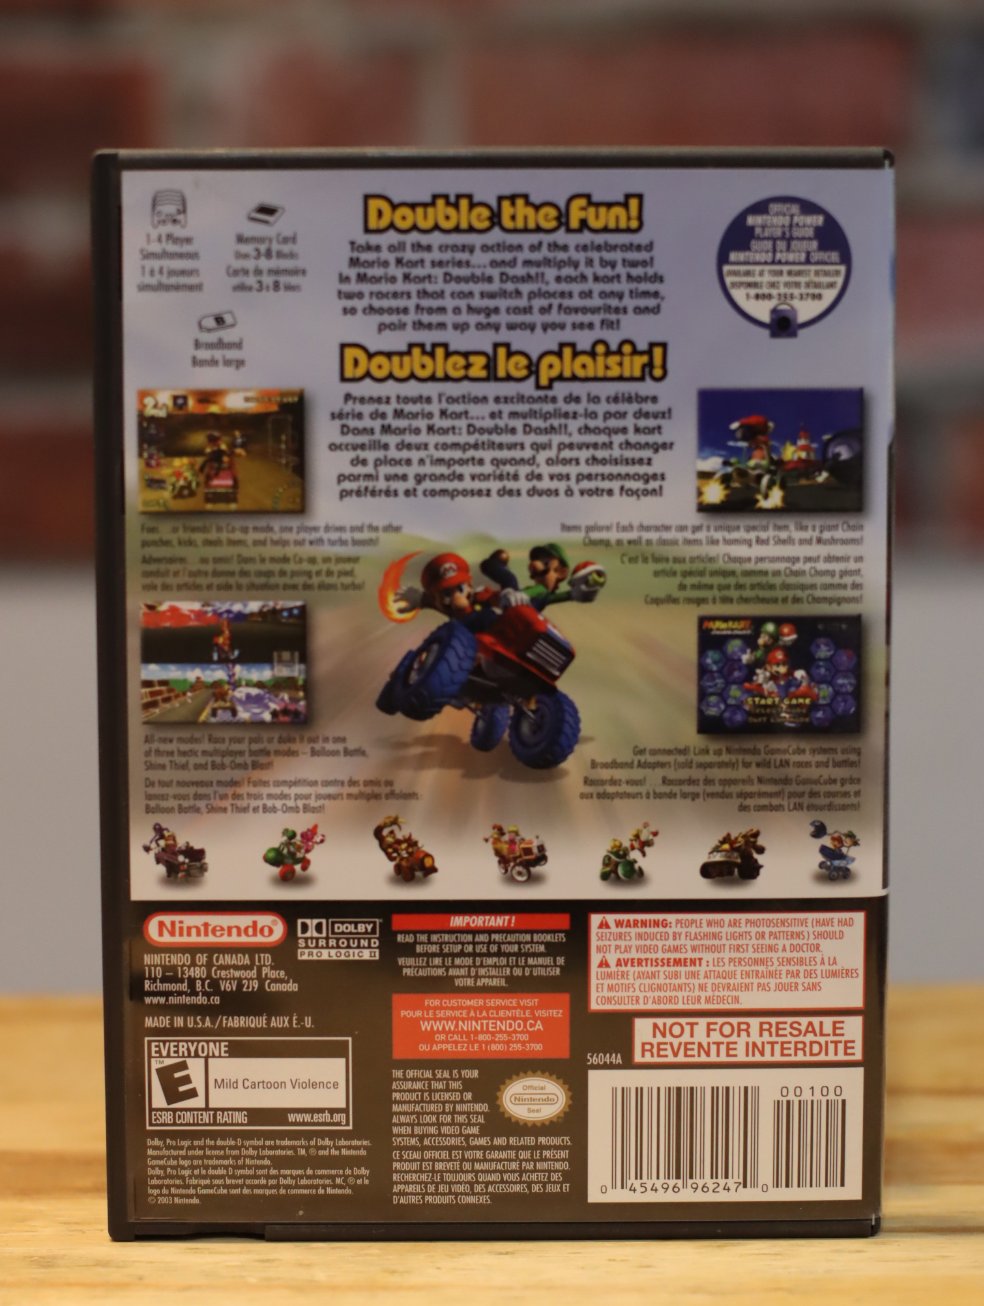 Mario Kart Double Dash Nintendo Game Cube Video Game Complete